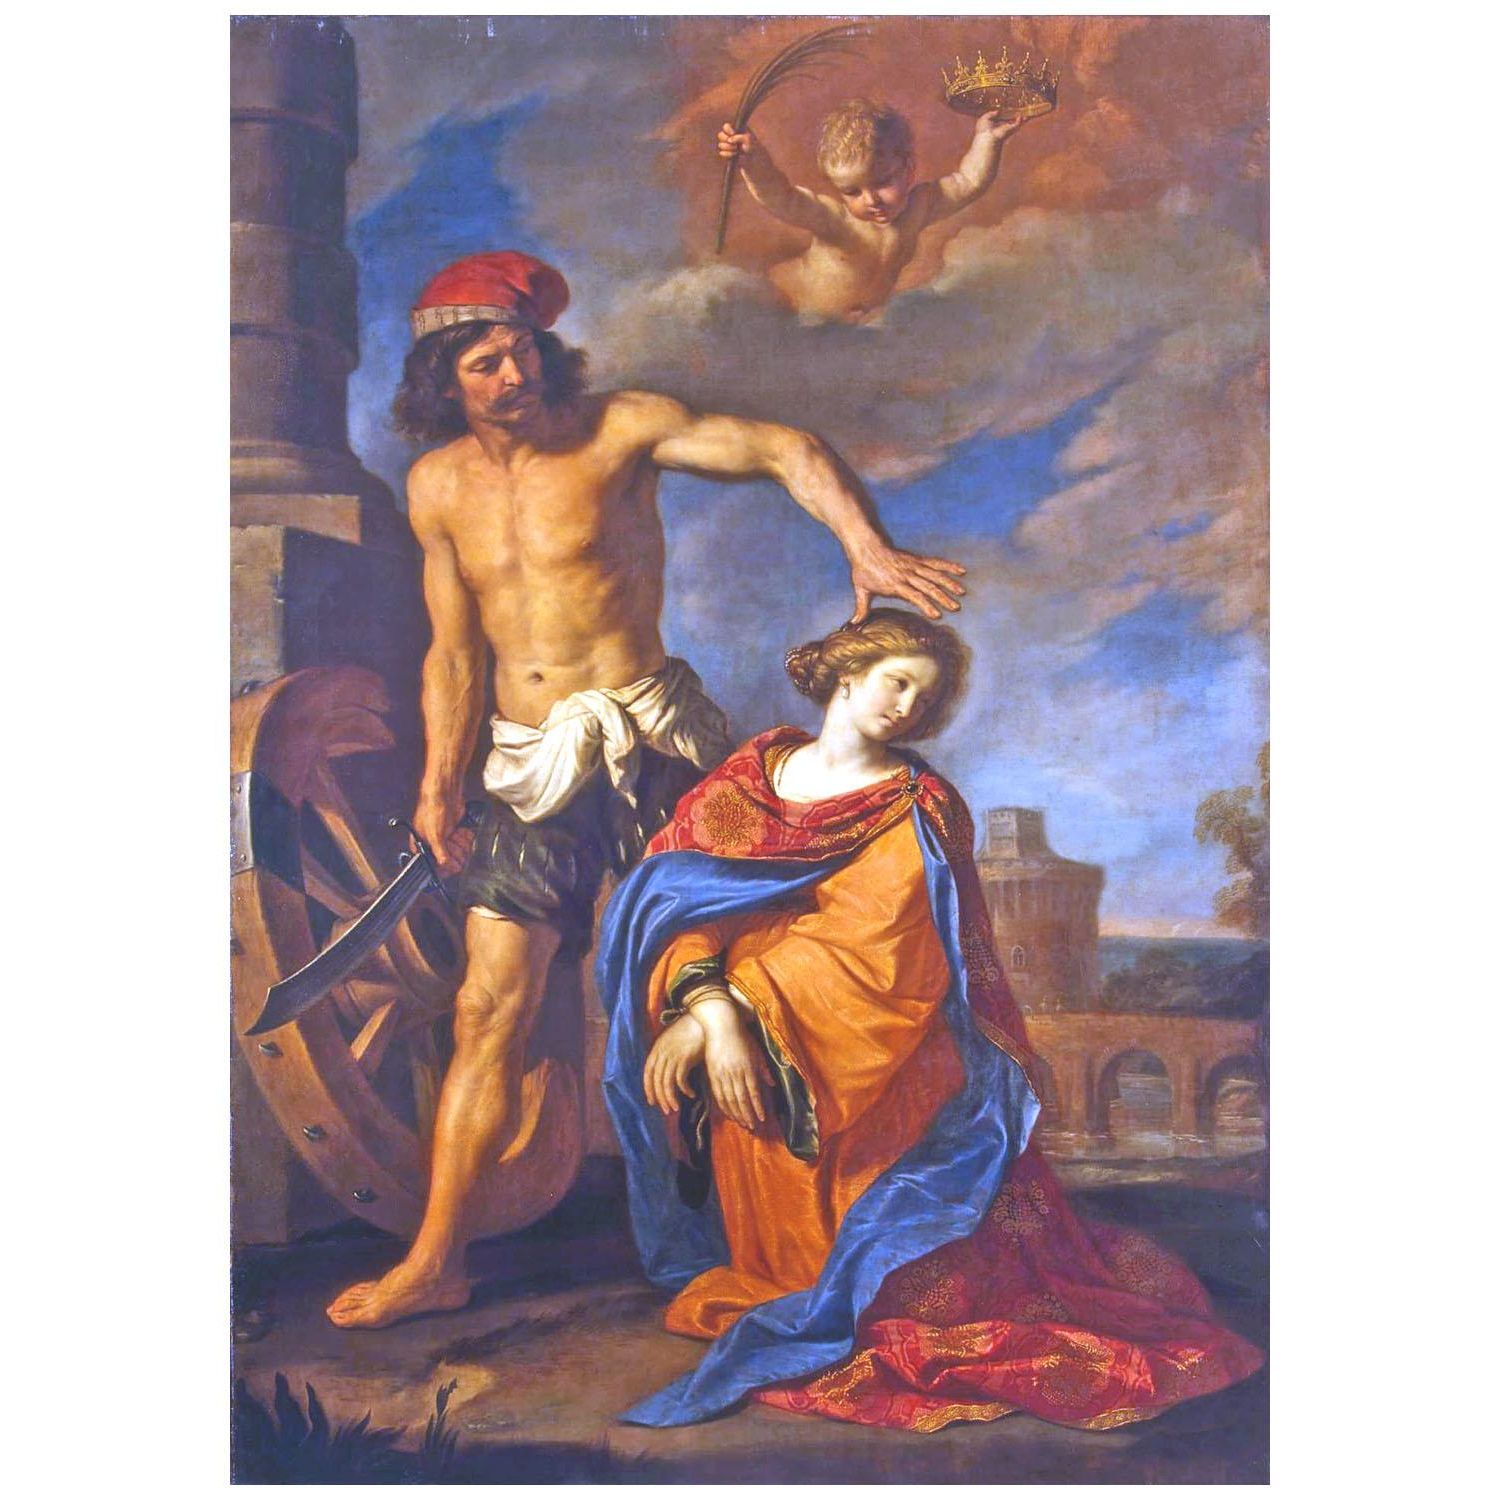 Guercino. Martirio di Santa Caterina. 1653. Hermitage Museum